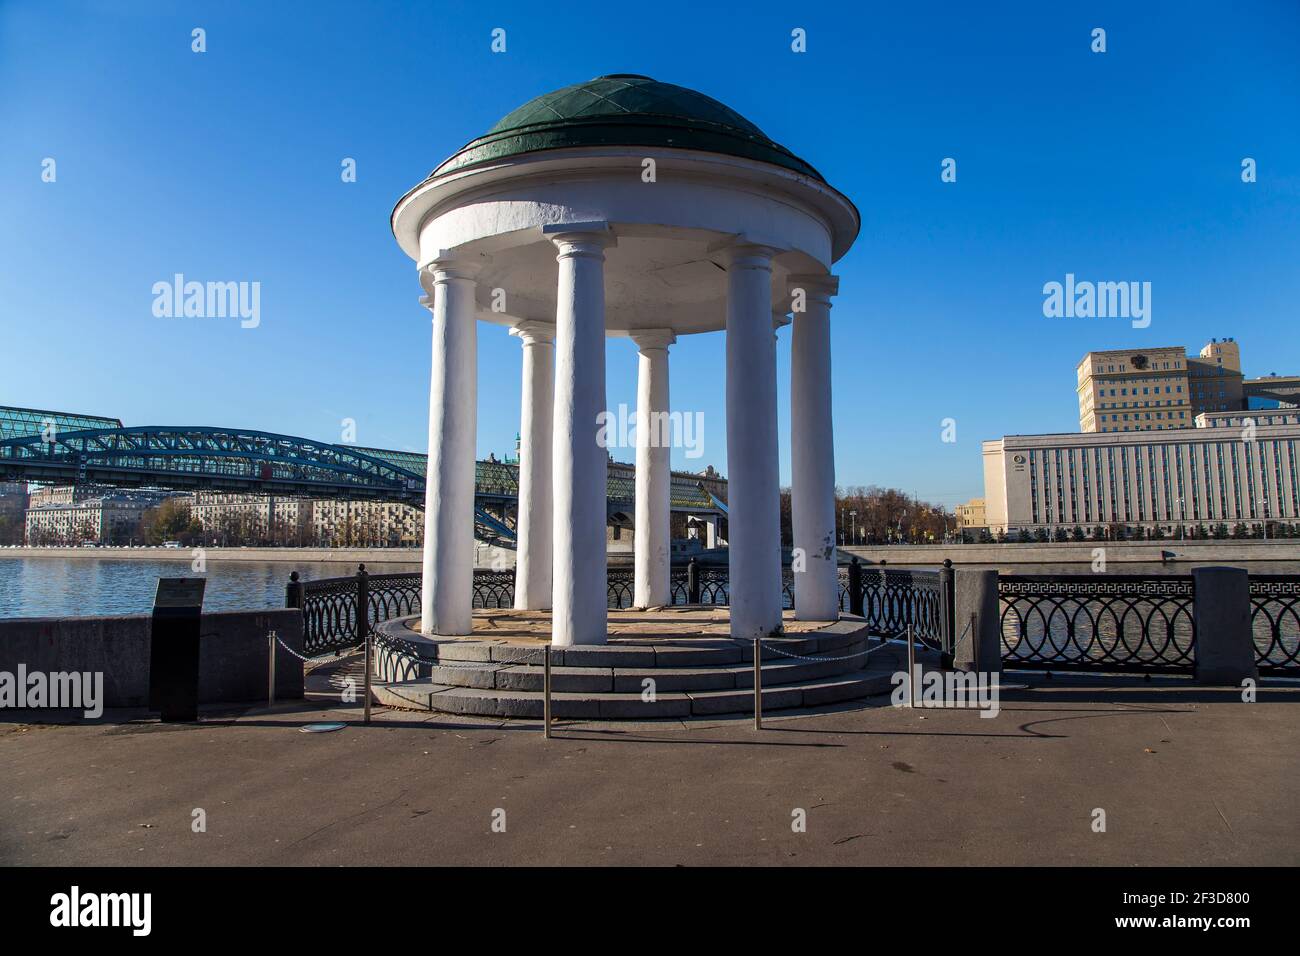 The rotunda on Pushkinskaya embankment in Gorky Park in Moscow, Russia (architect M. F. Kazakov built in the early nineteenth century) Stock Photo